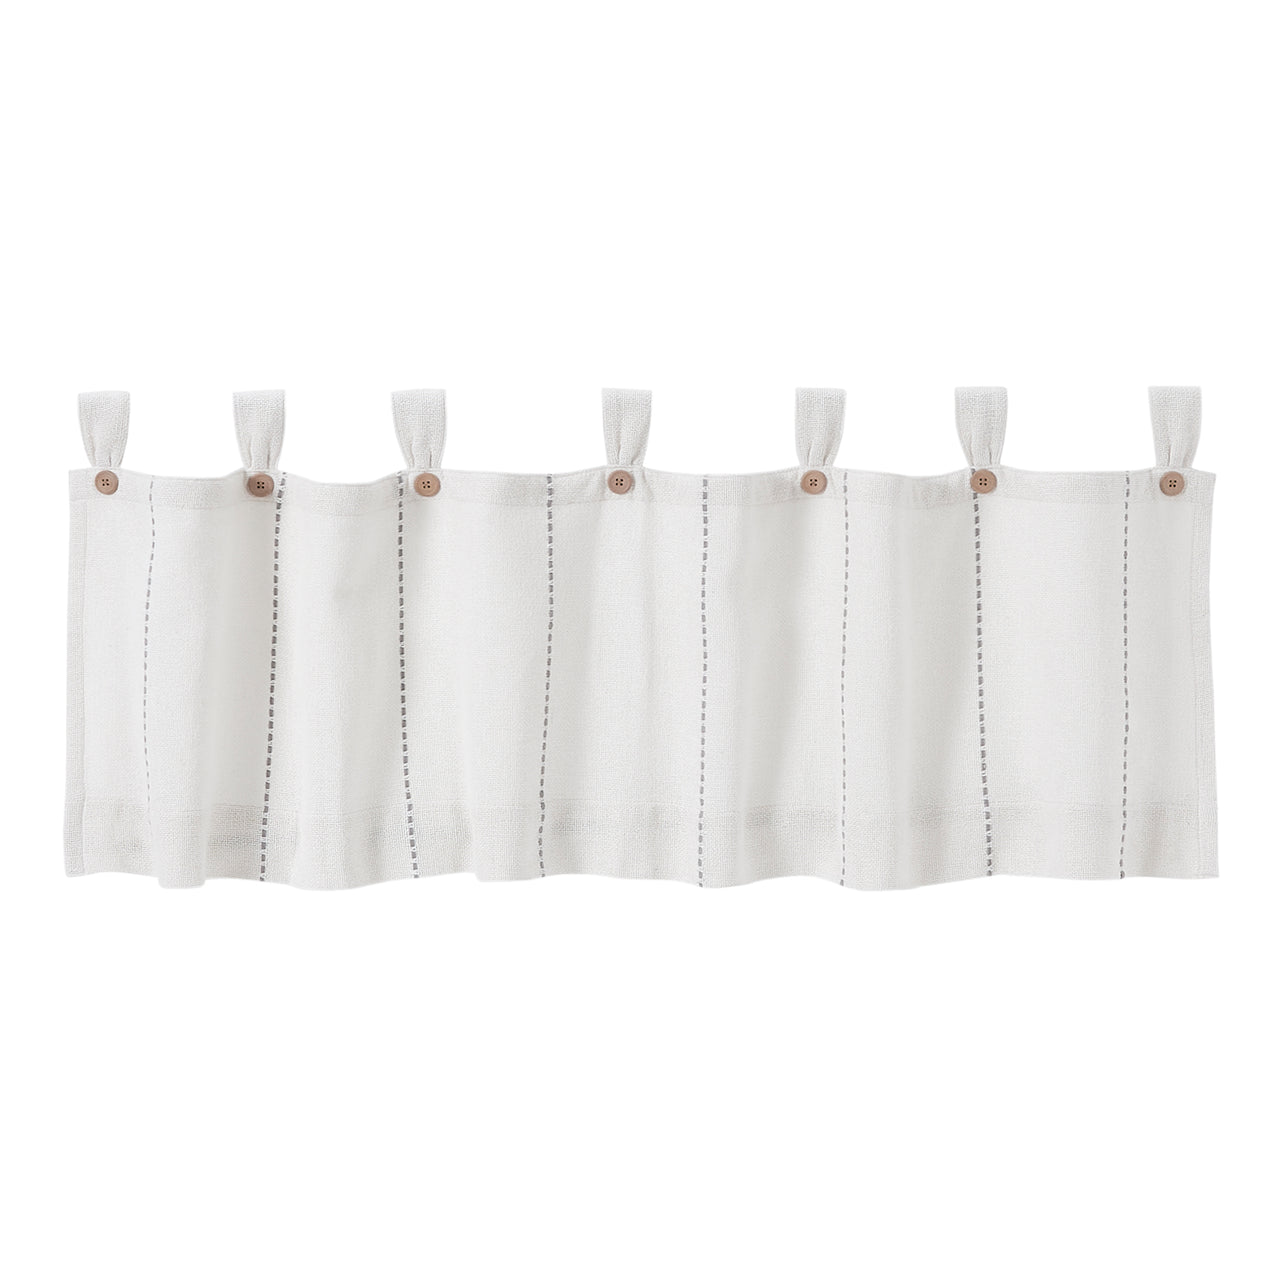 Stitched Burlap White Valance Curtain 16x60 VHC Brands